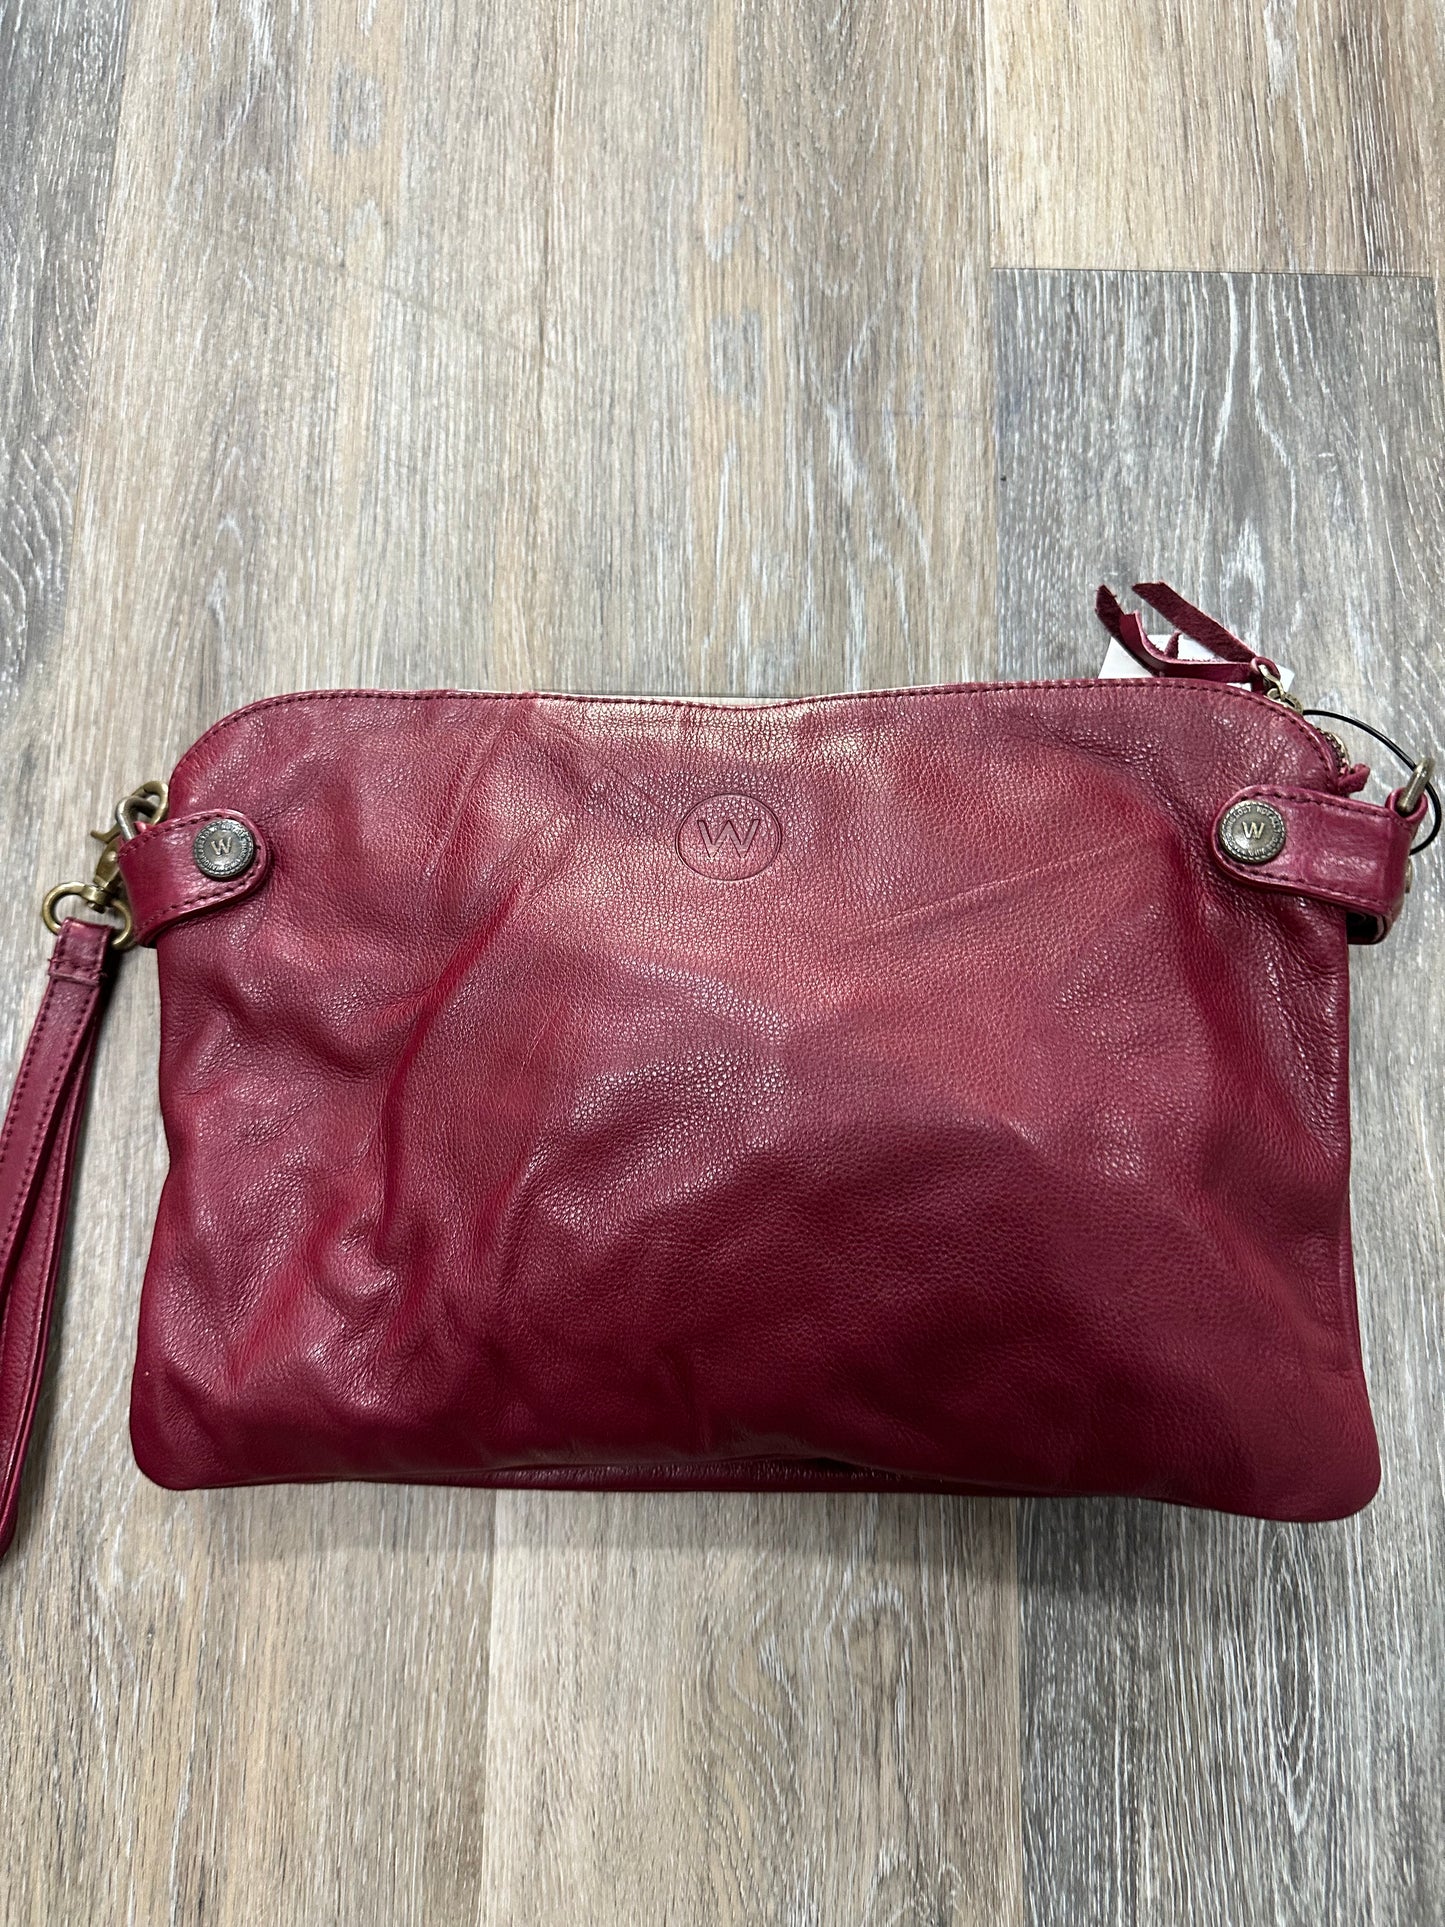 Handbag Leather By Wanderers  Size: Medium